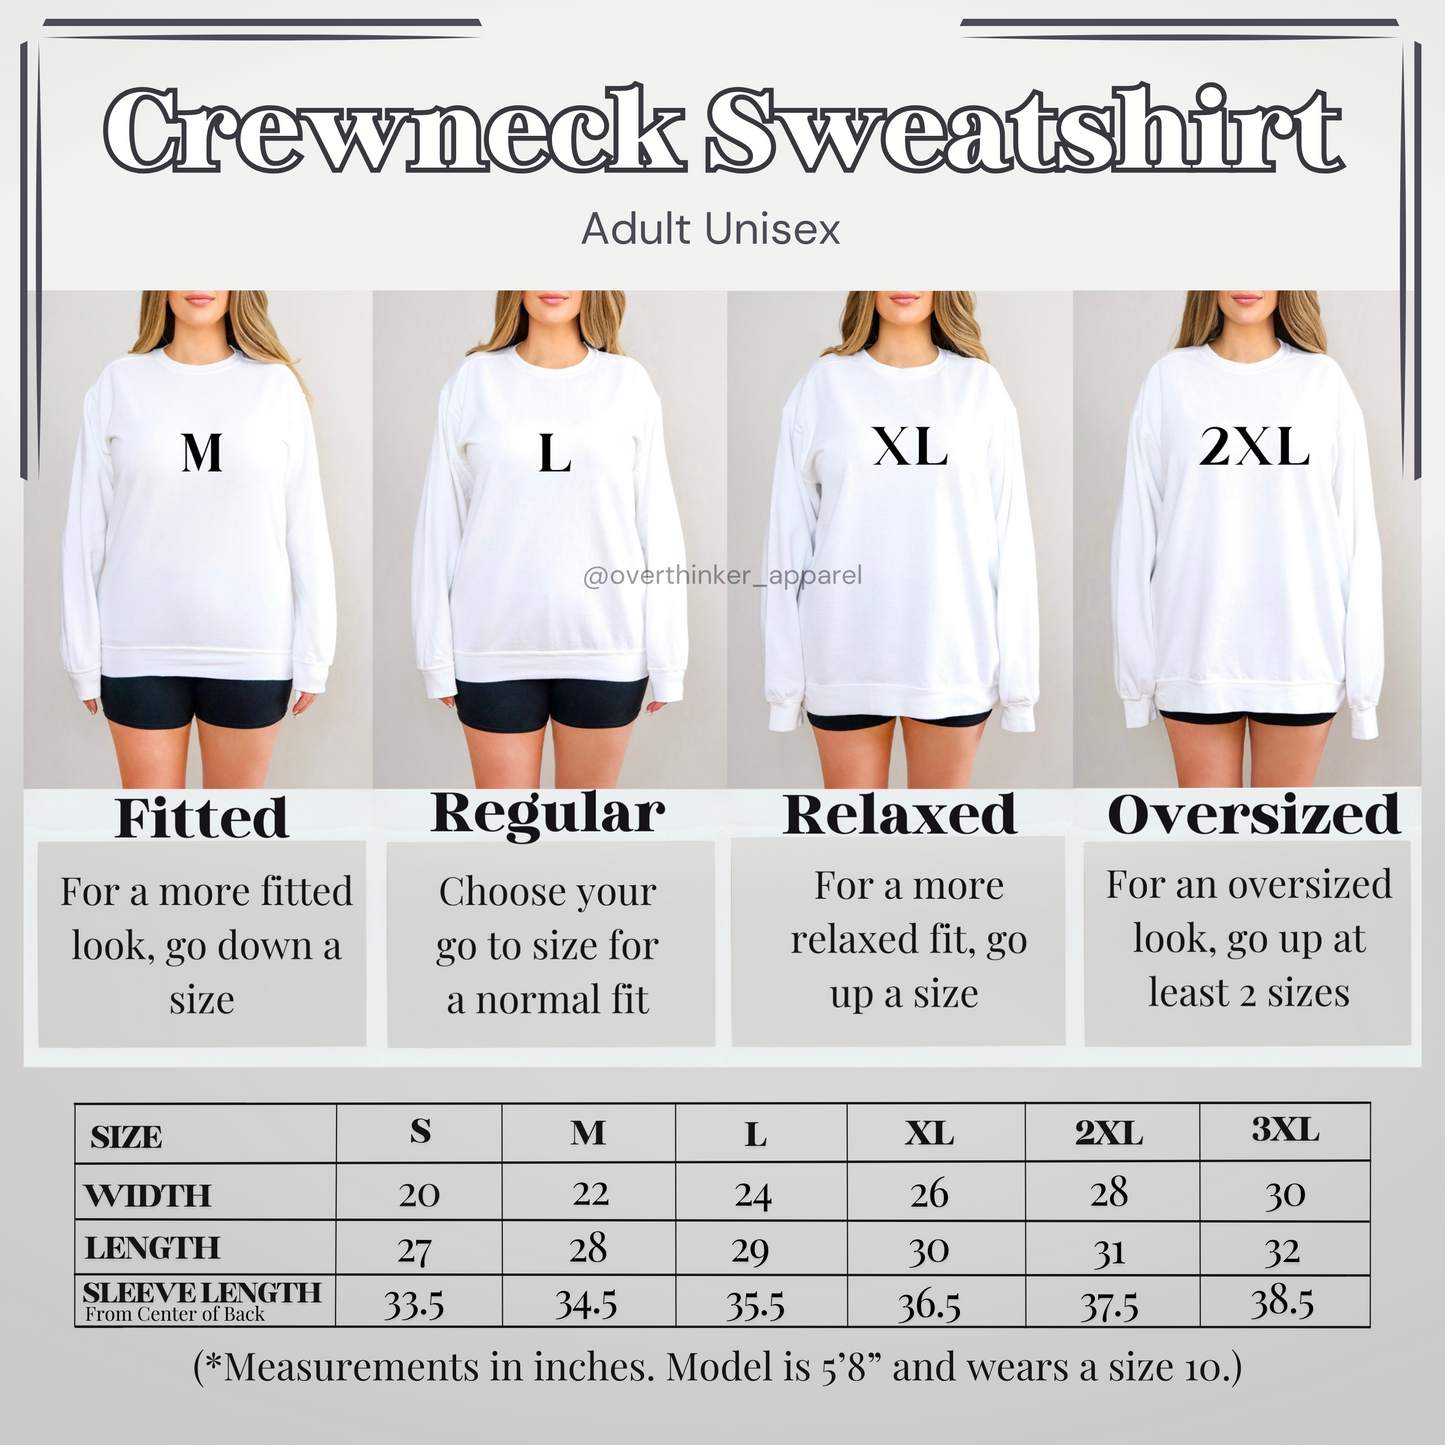 GOOD THINGS TAKE TIME Embroidered Crewneck Sweatshirt